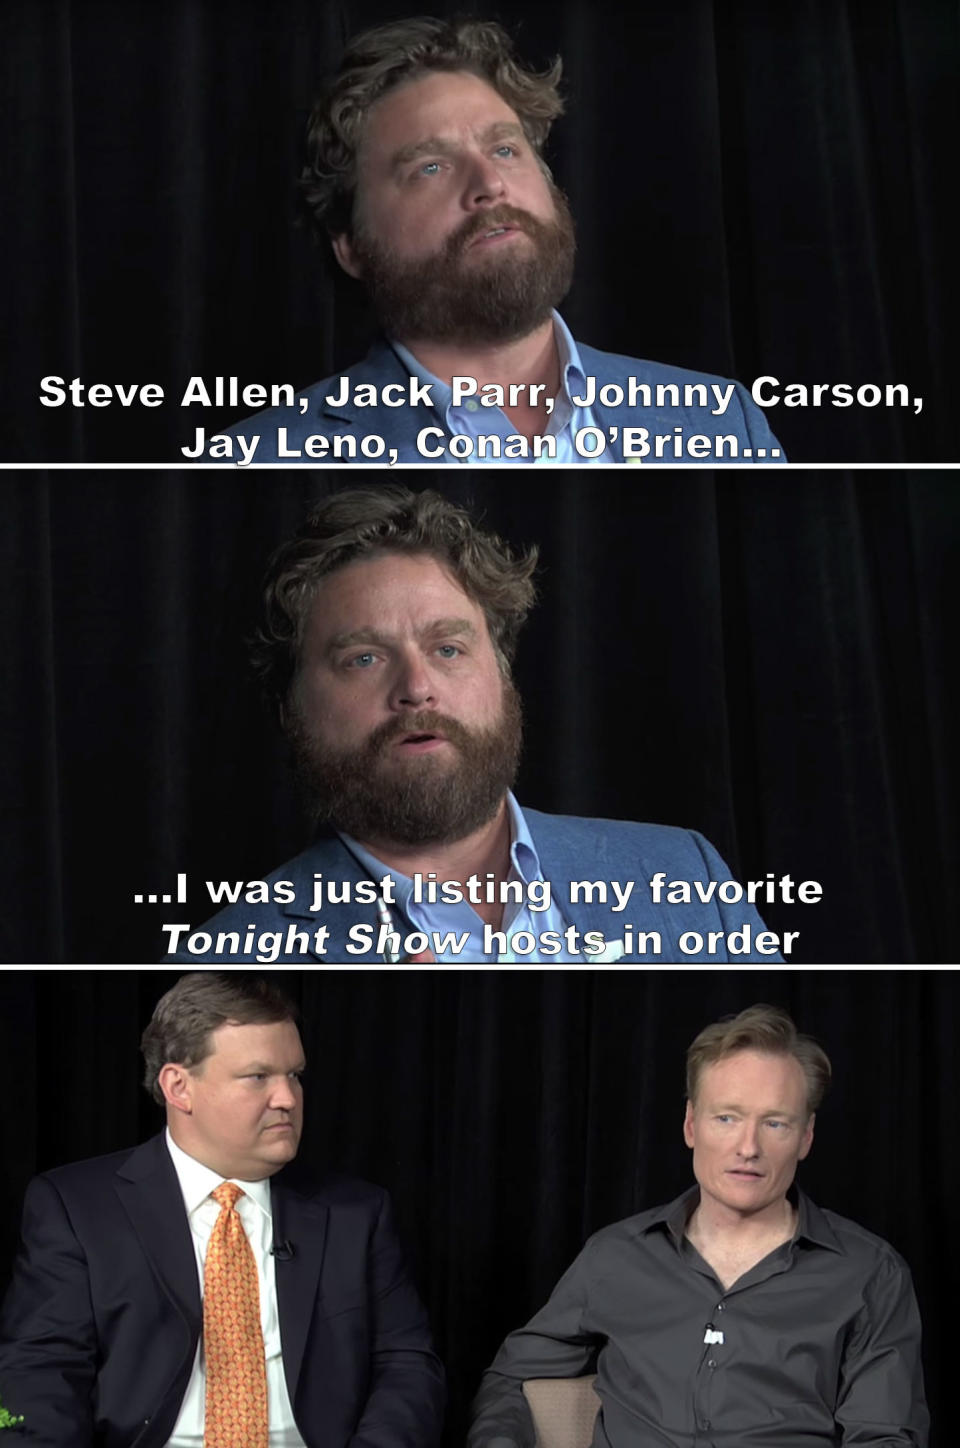 Zach: Steve Allen, Jack Paar, Johnny Carson, Jay Leno, Conan O'Brien, I was just listing my favorite Tonight Show hosts in order